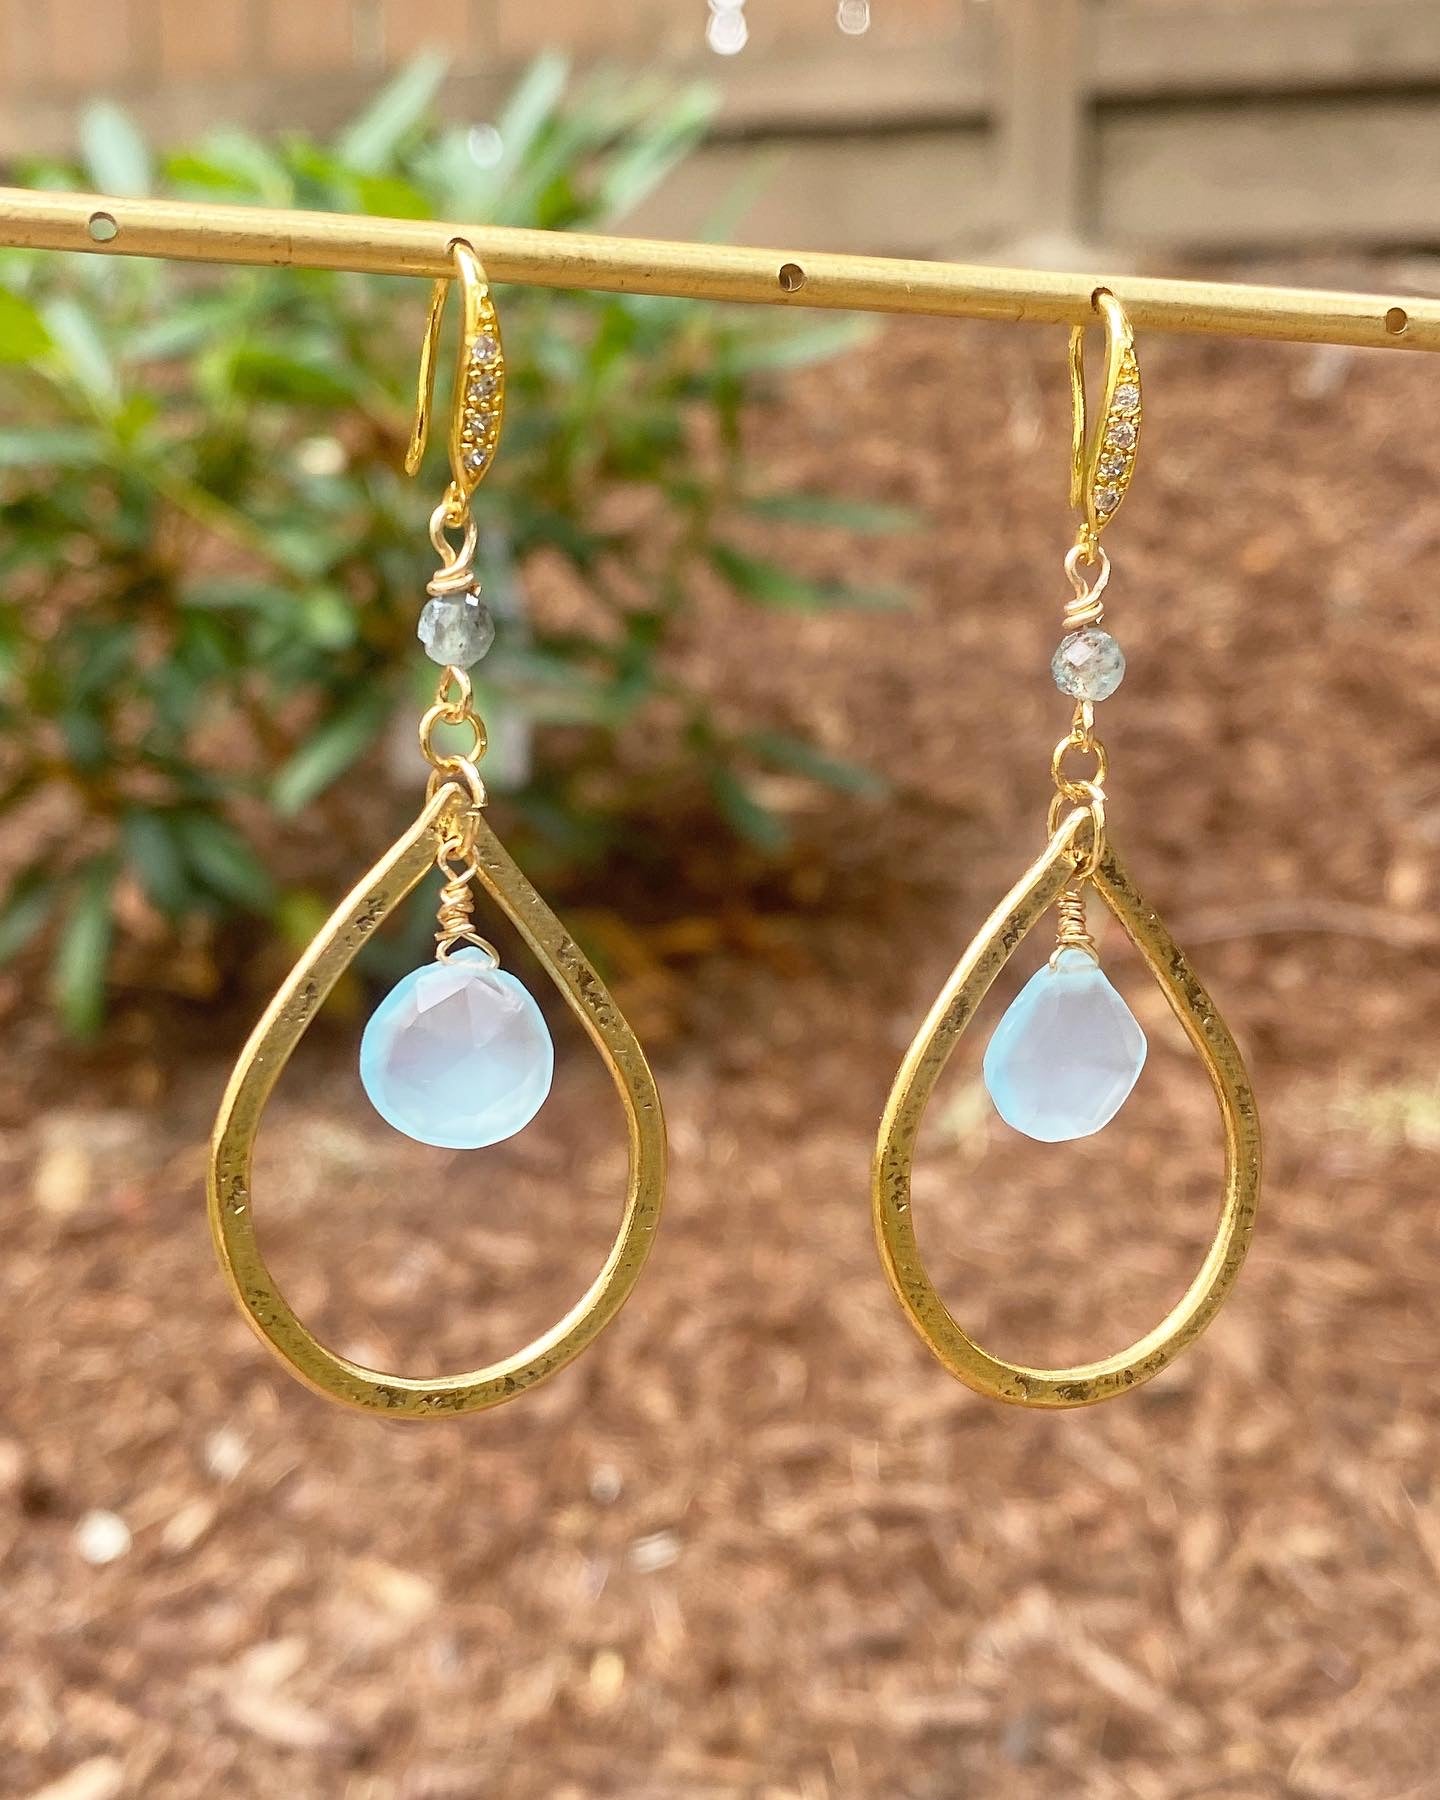 Heart blue chalcedony stone, gold metal hoop earrings. - Andria Bieber Designs 